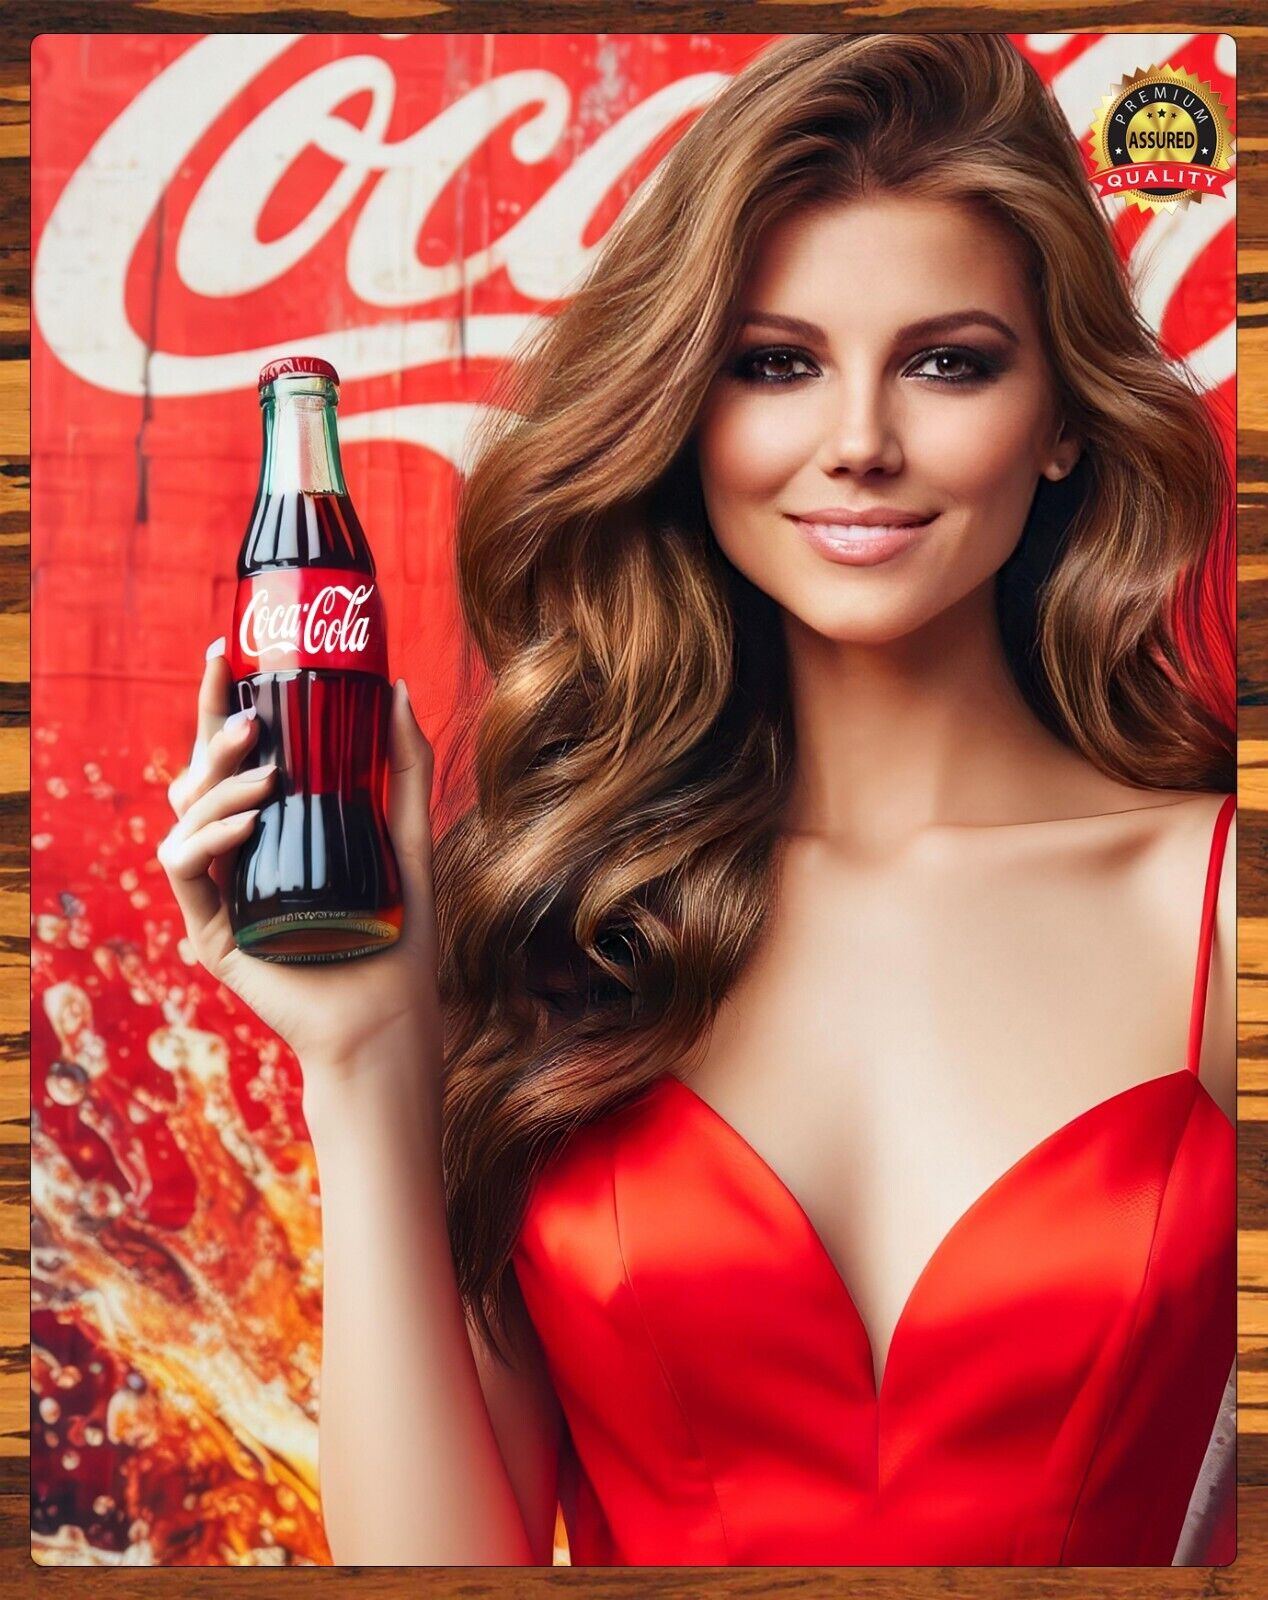 Coca-Cola - Coke - Soda - Beautiful Lady - 1990s - Metal Sign 11 x 14